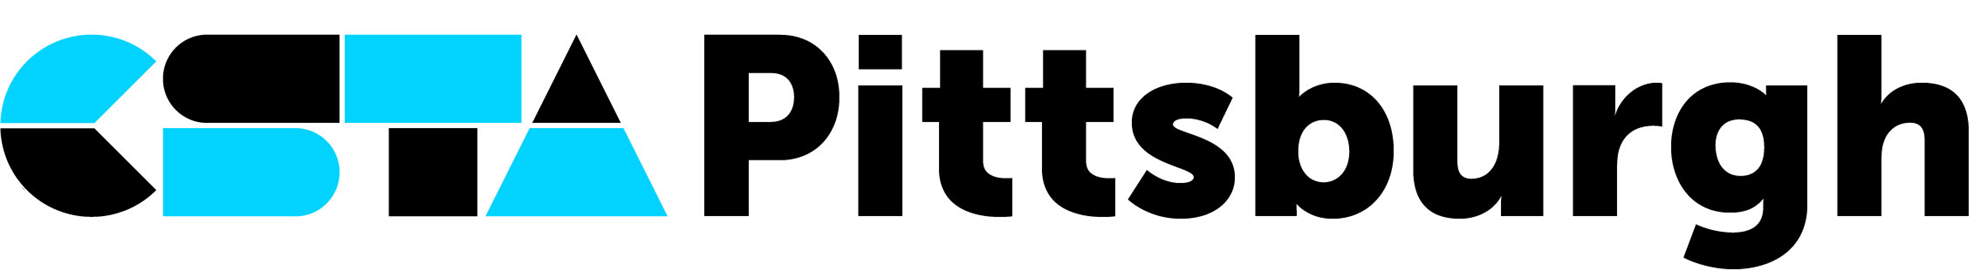 CSTA Pittsburgh logo